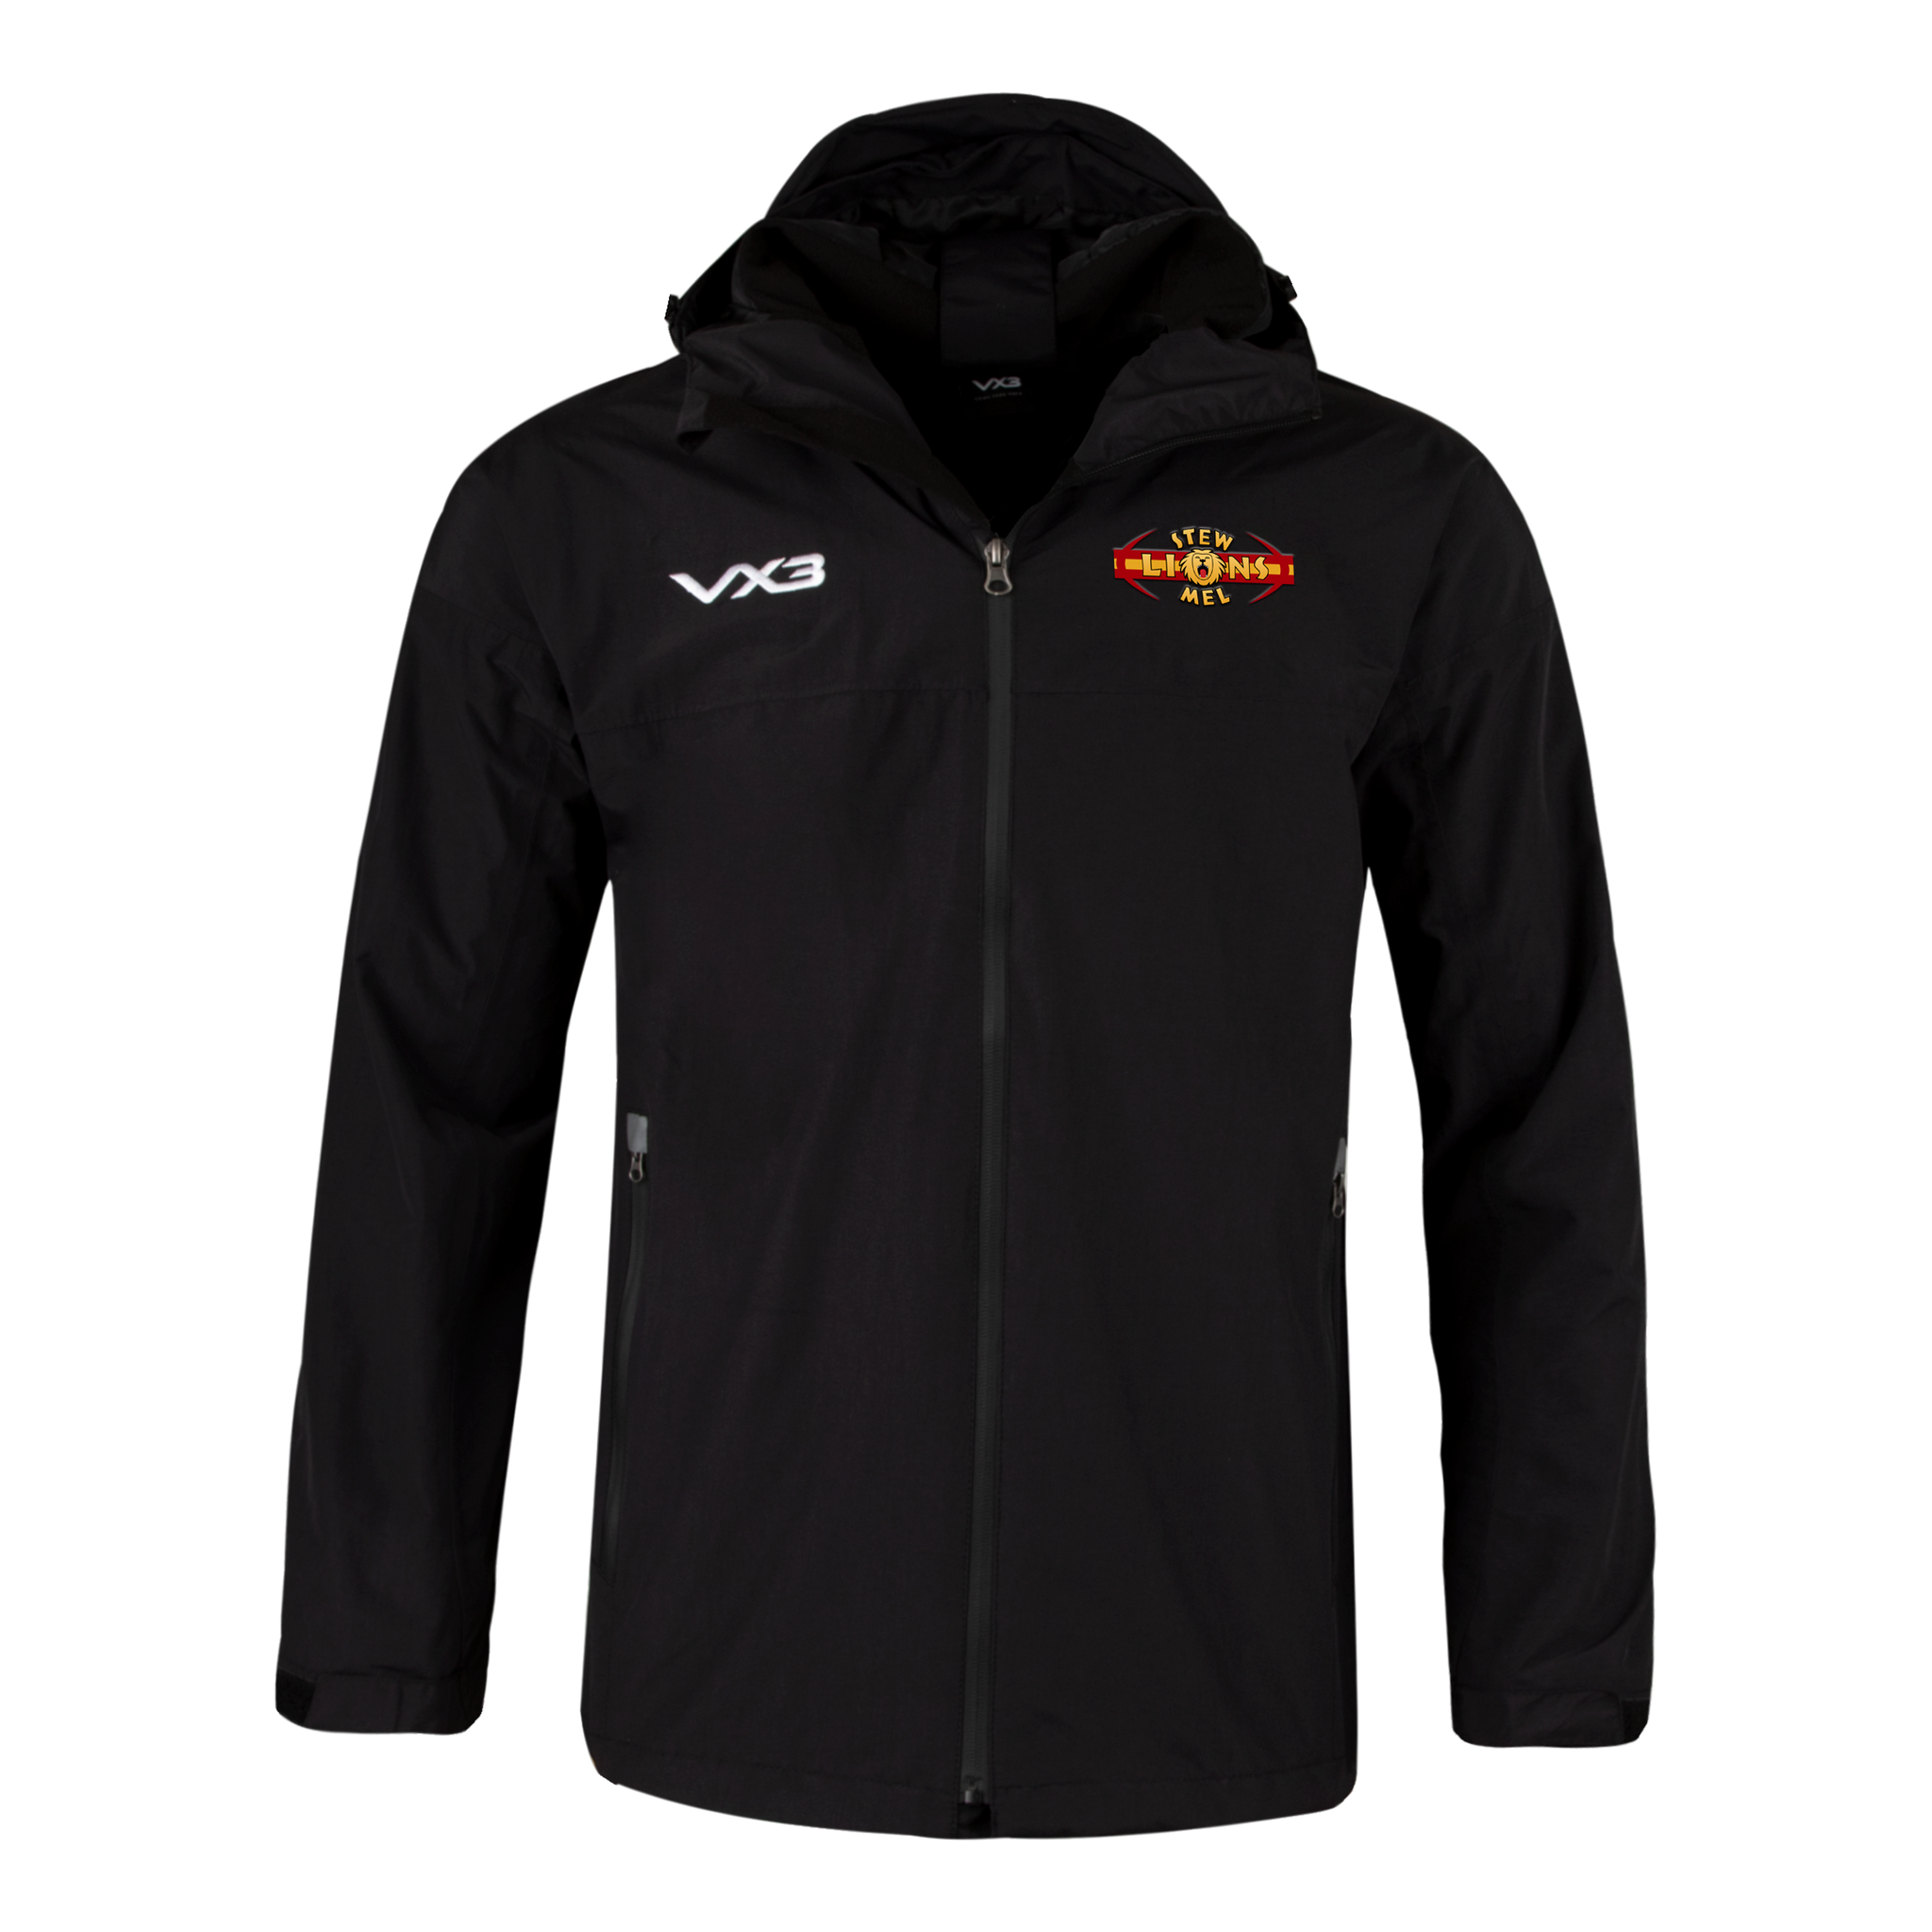 Stew Mel Lions Rugby Club Protego Waterproof Jacket